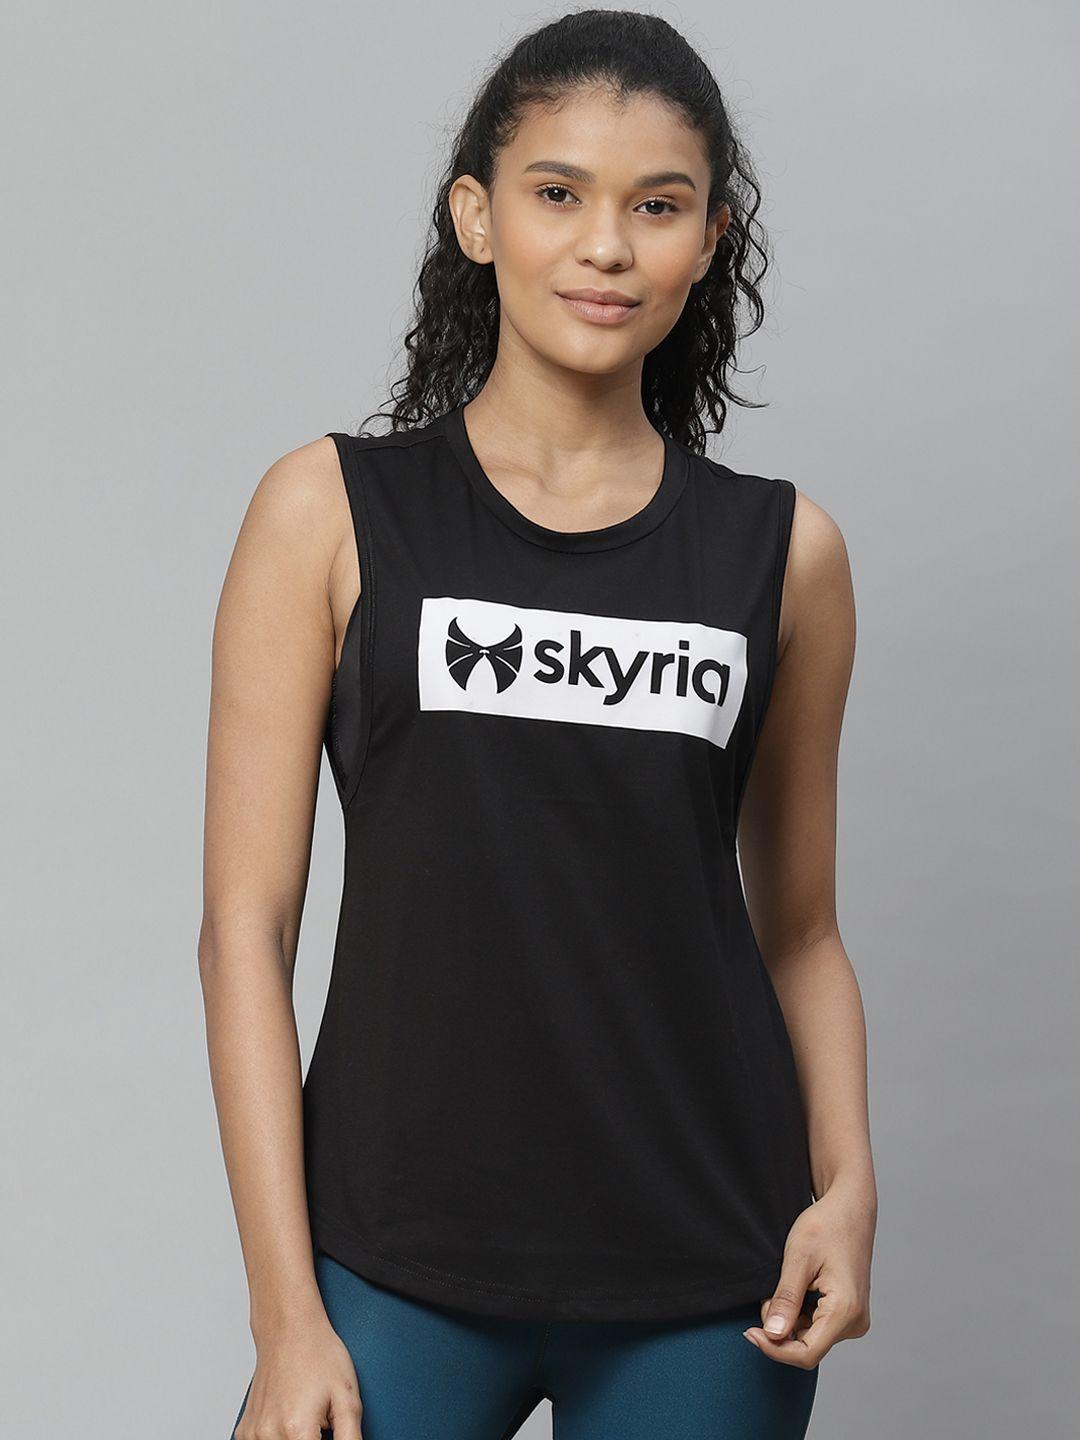 skyria women black & white printed tank top